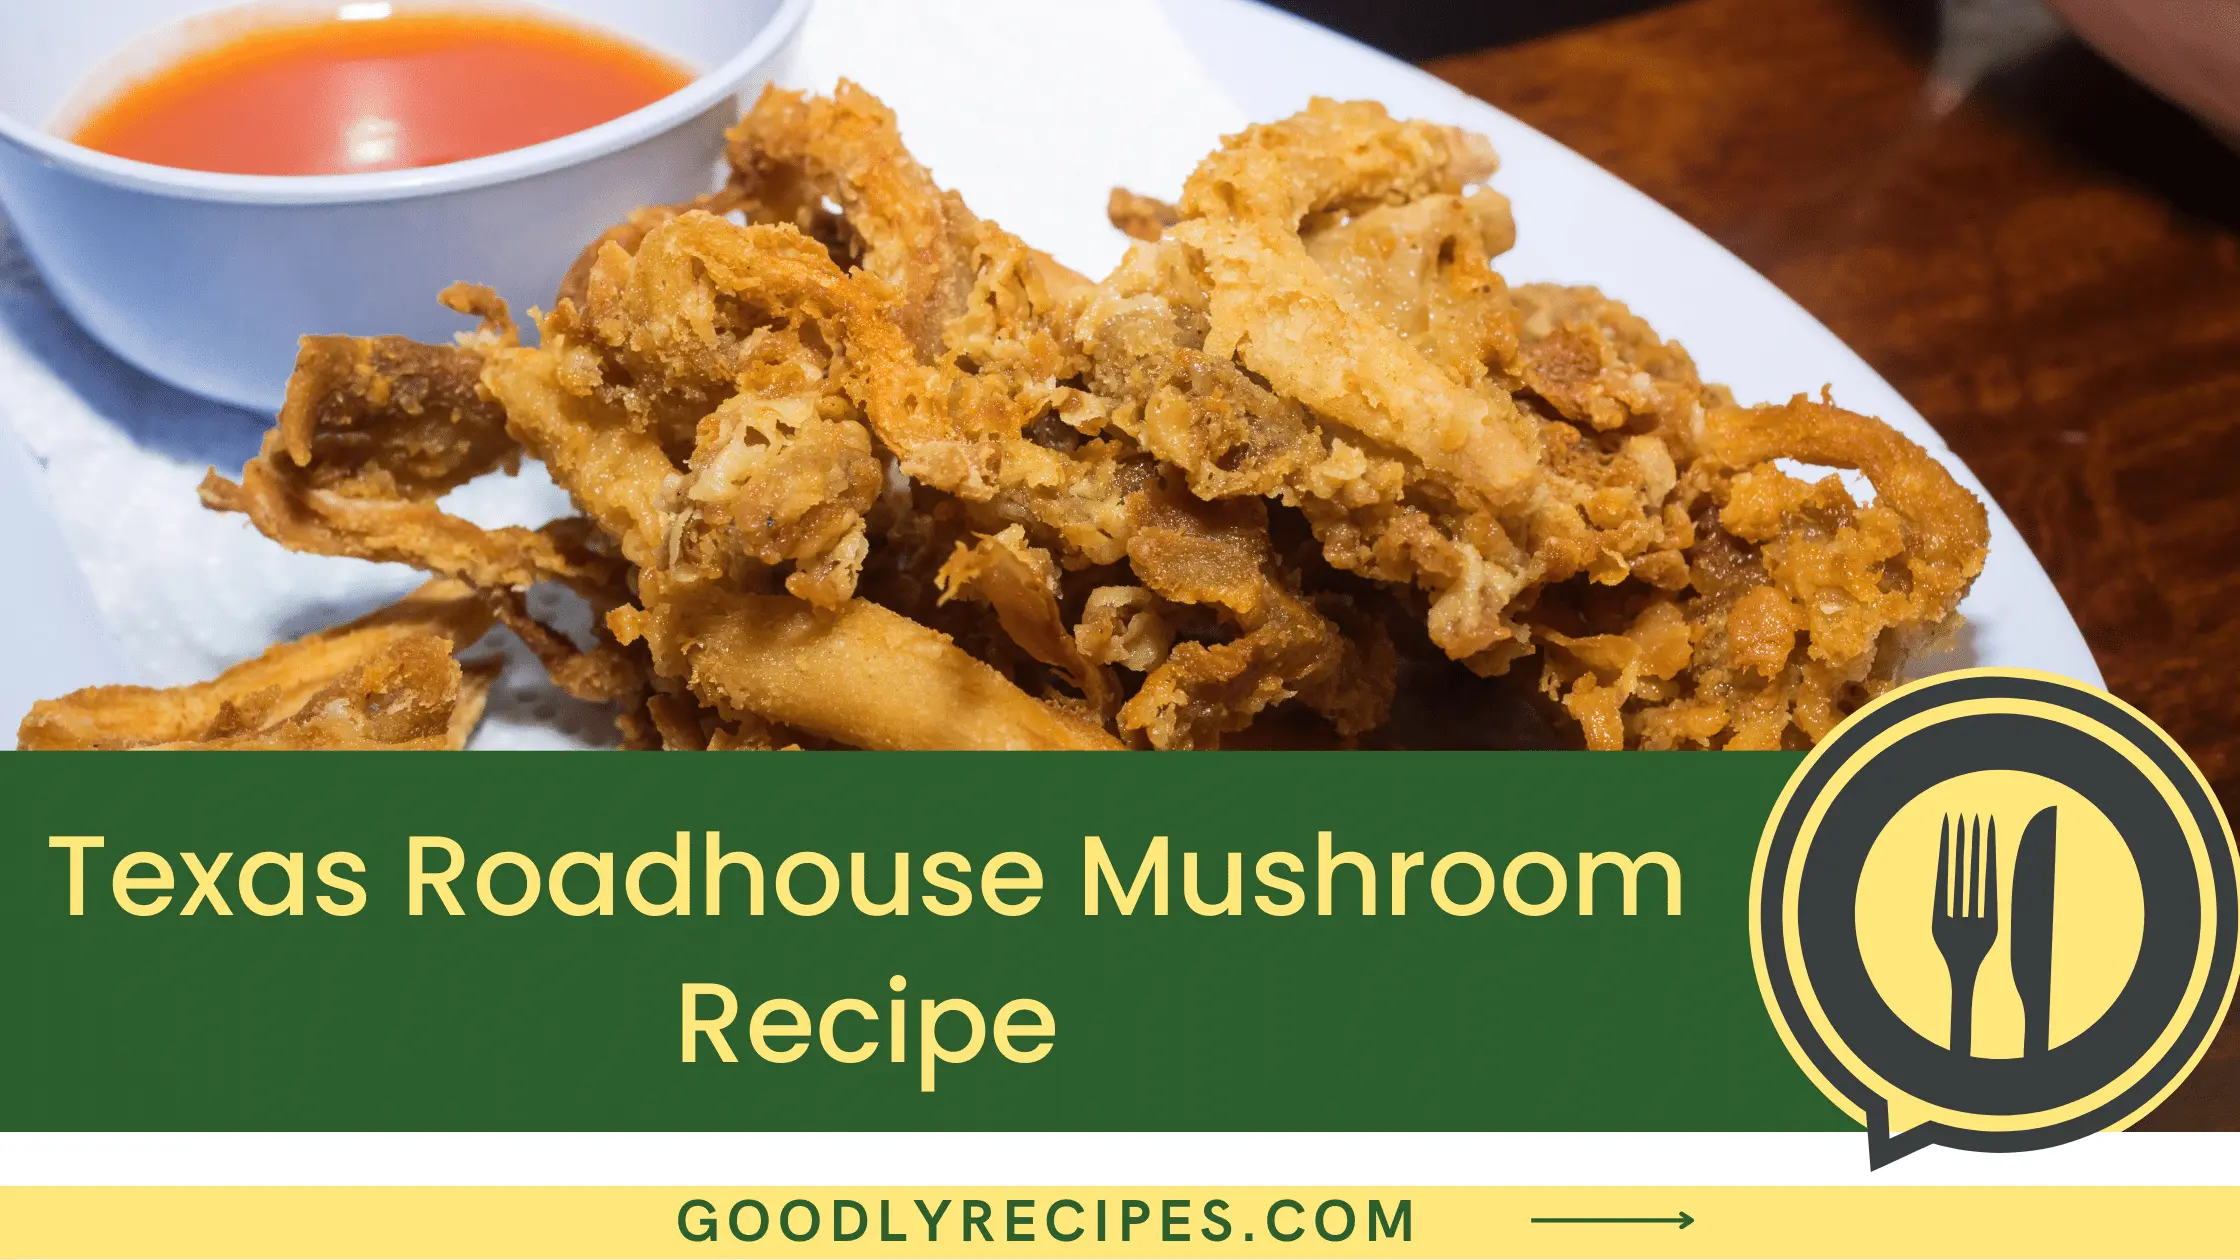 Texas Roadhouse Mushroom Recipe - For Food Lovers